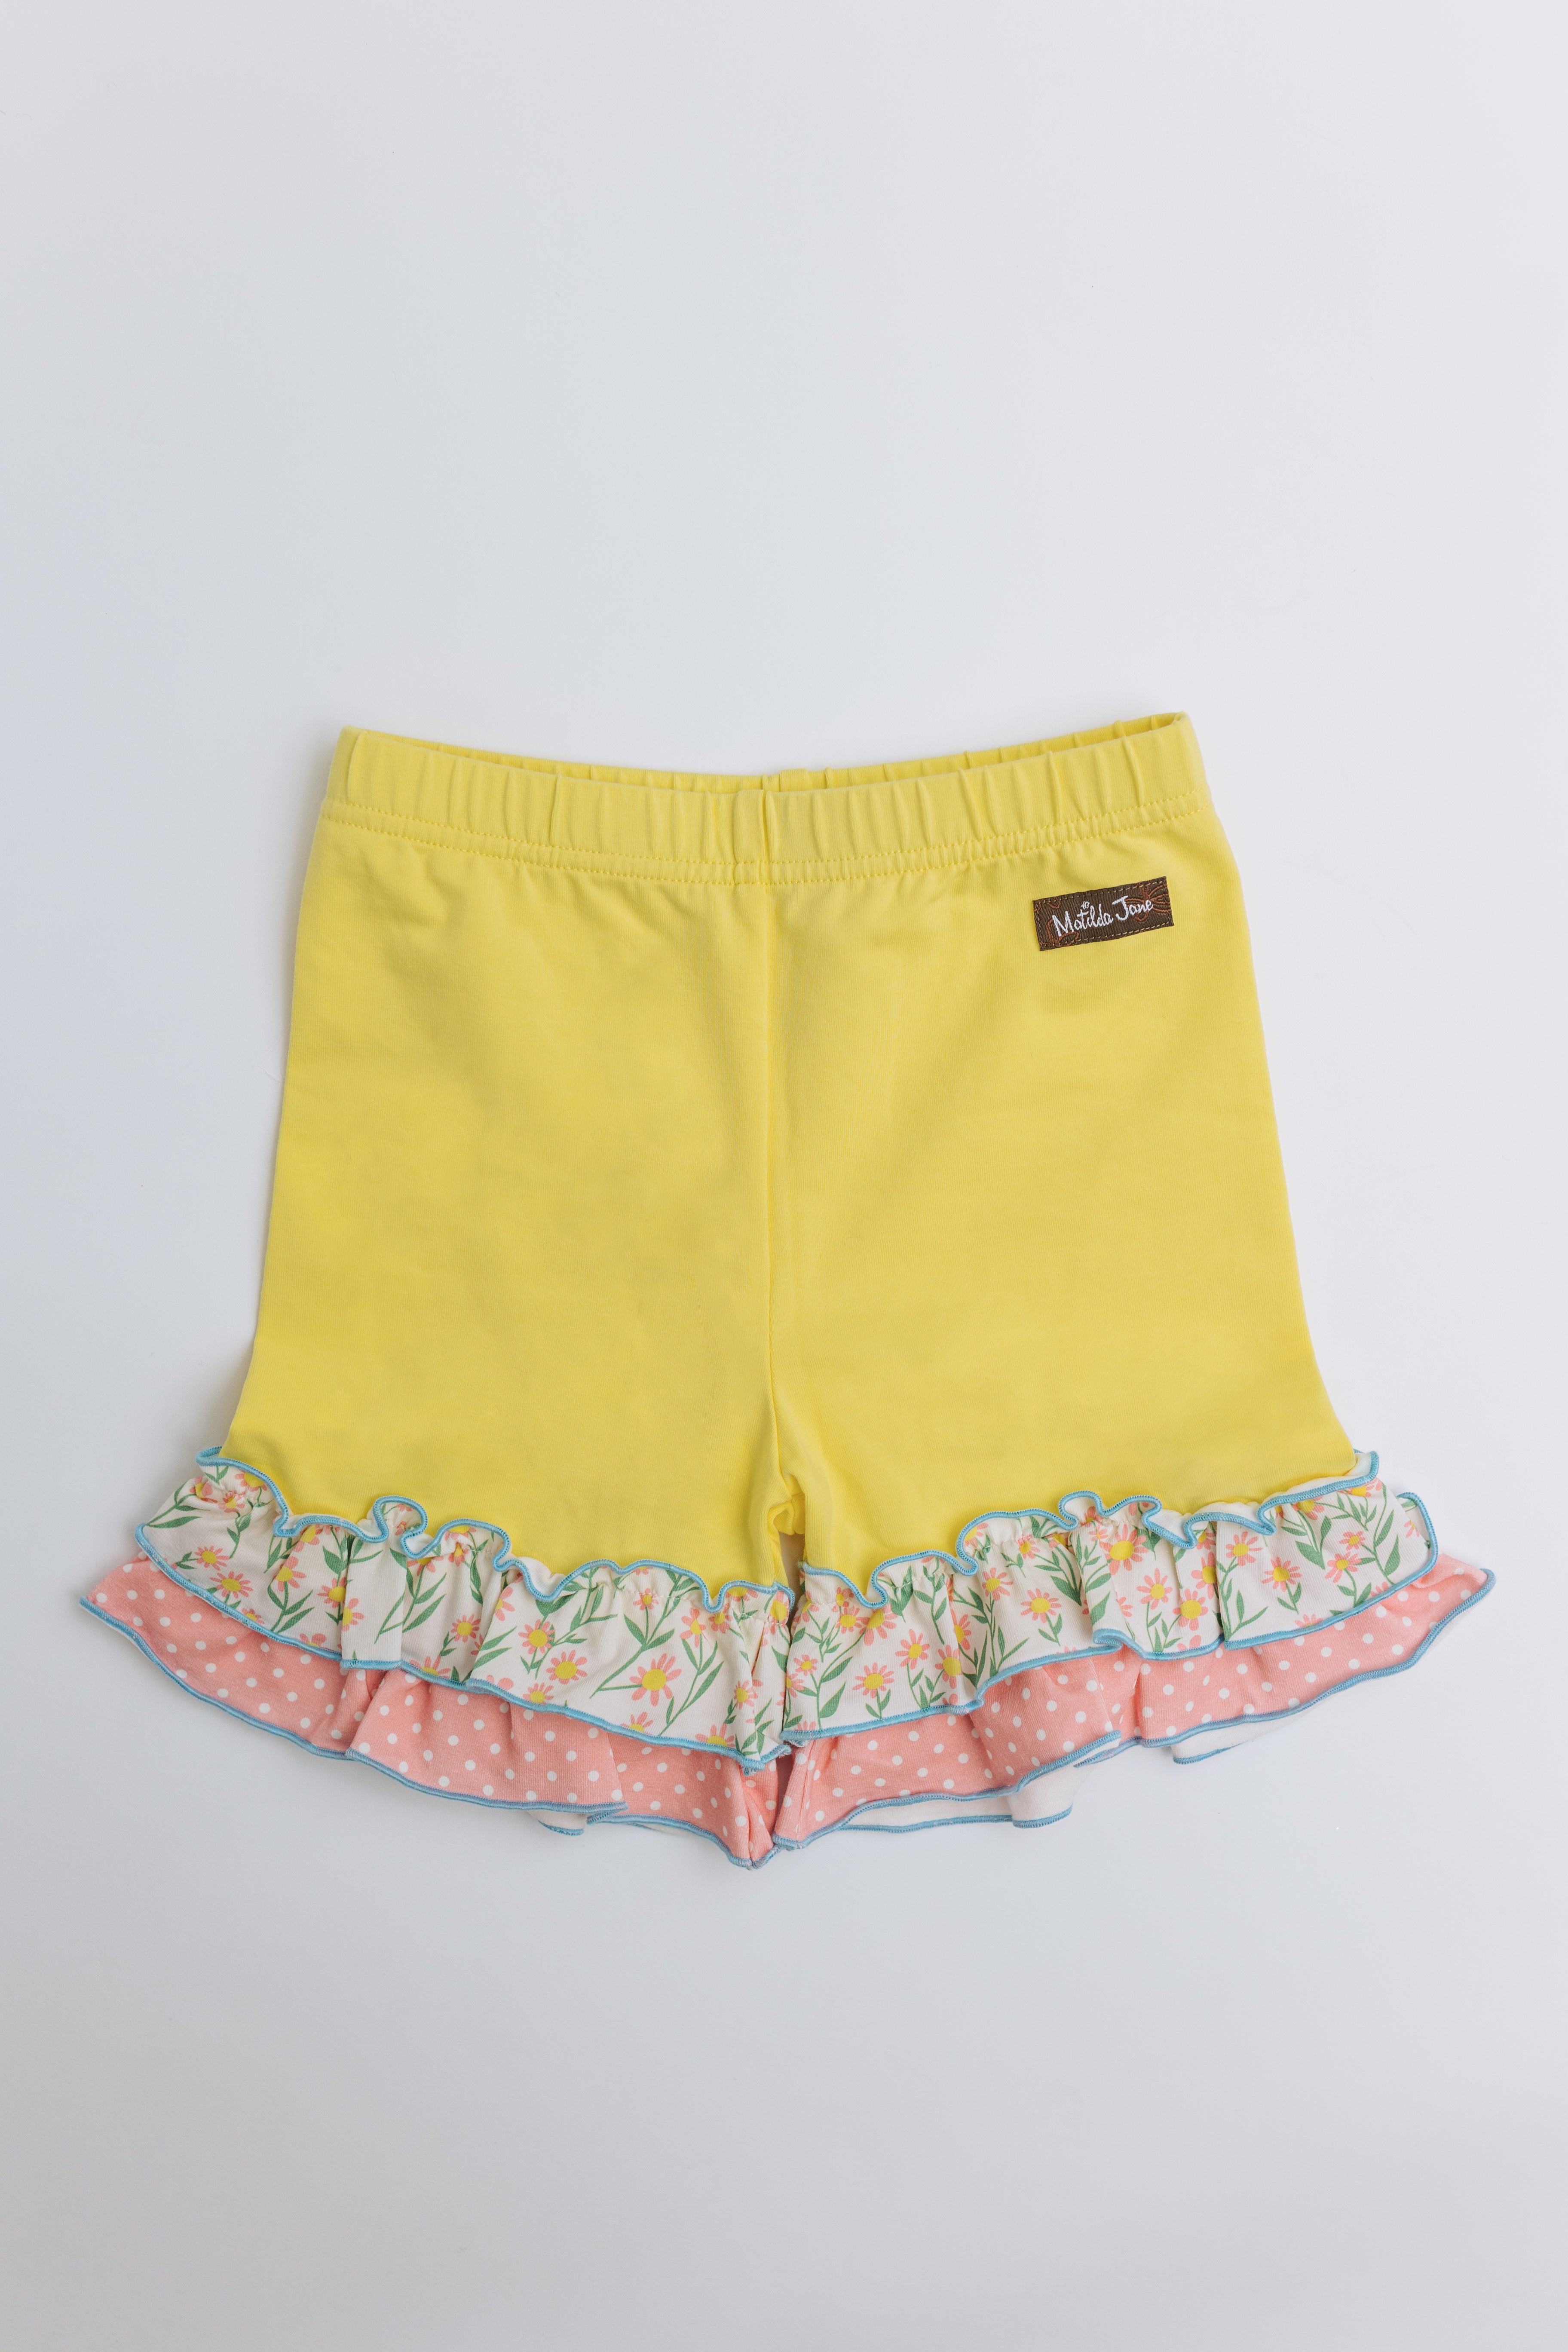 Ruffle Pants – Matilda Jane Clothing